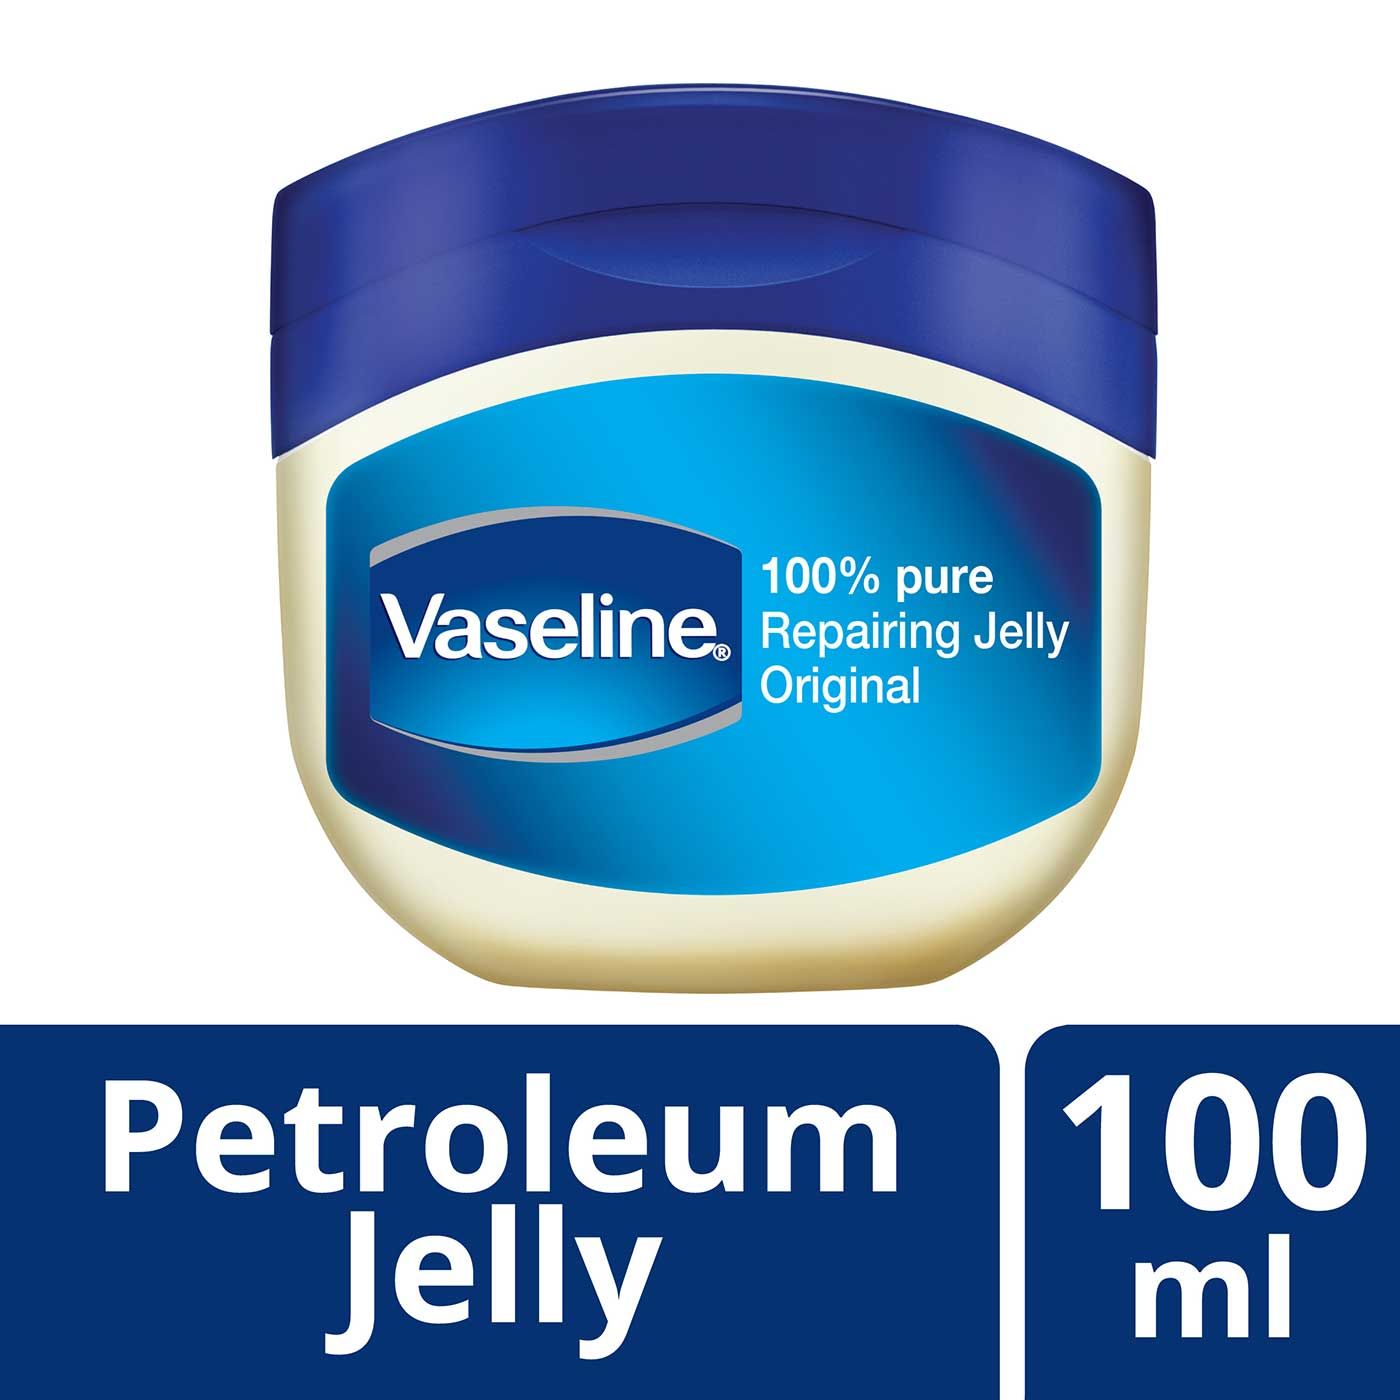 Vaseline Repairing Jelly Original 100ml - 1